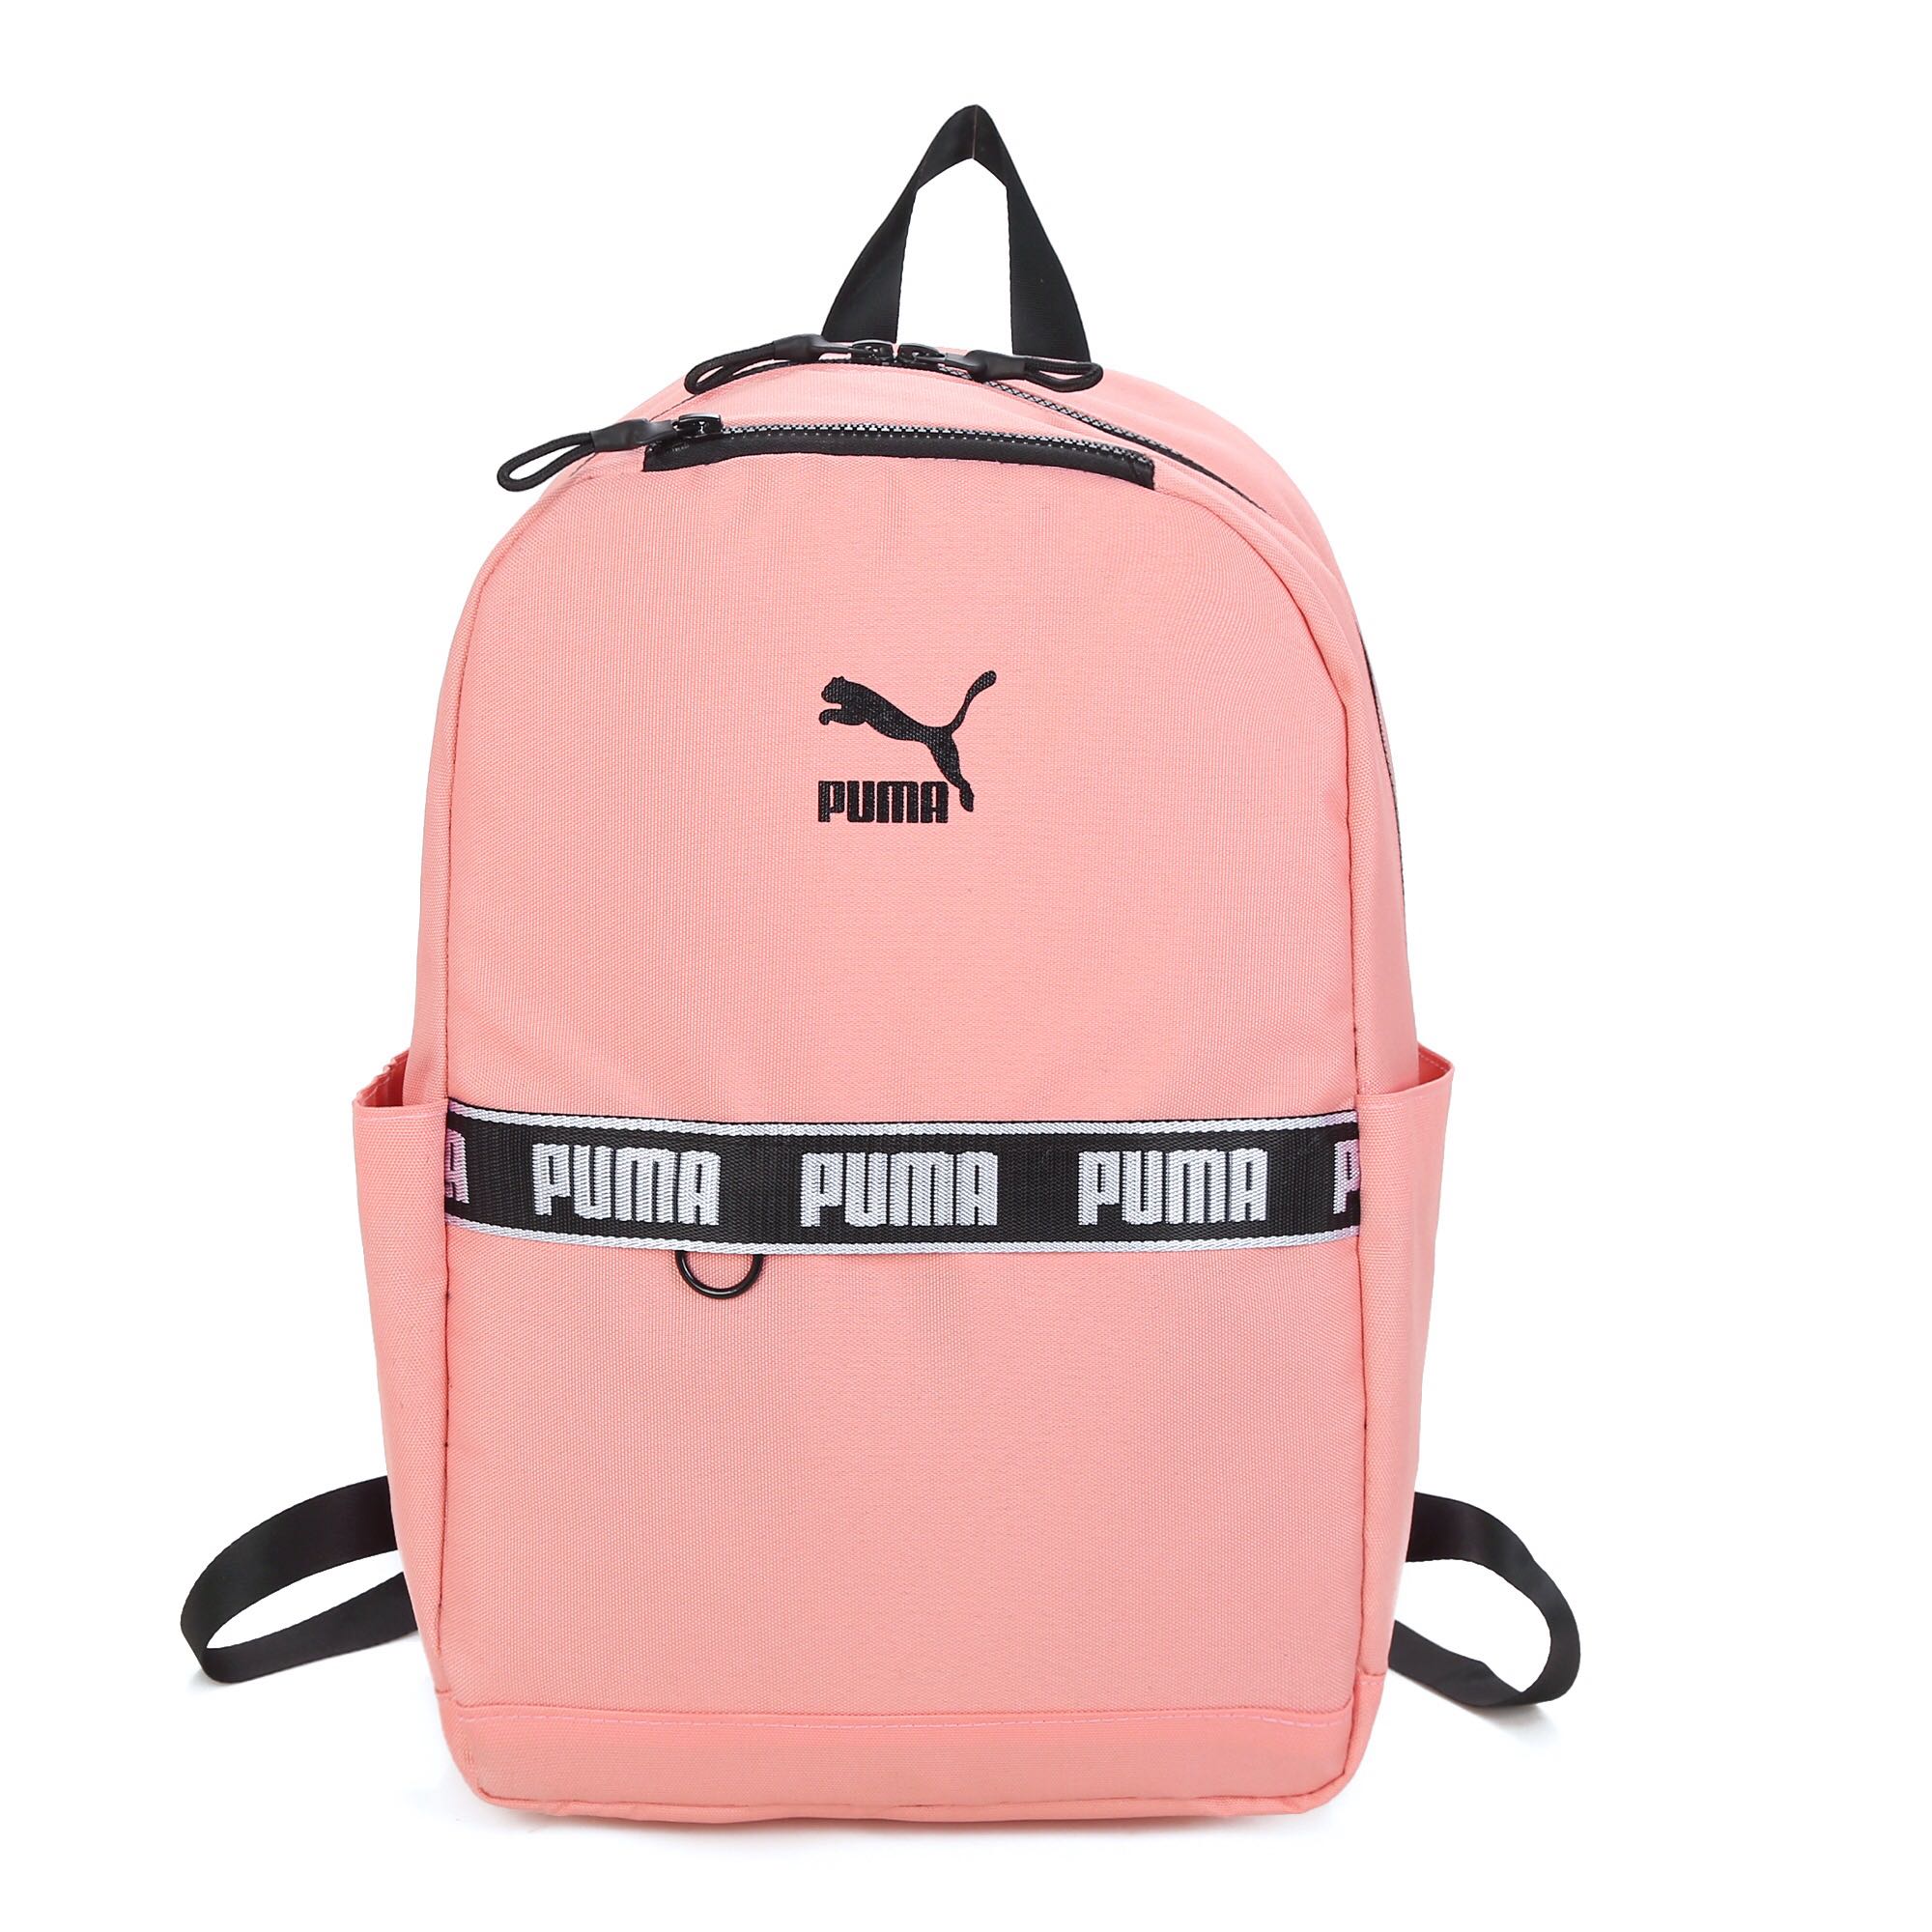 Instock Puma Backpack Pink, Women's 